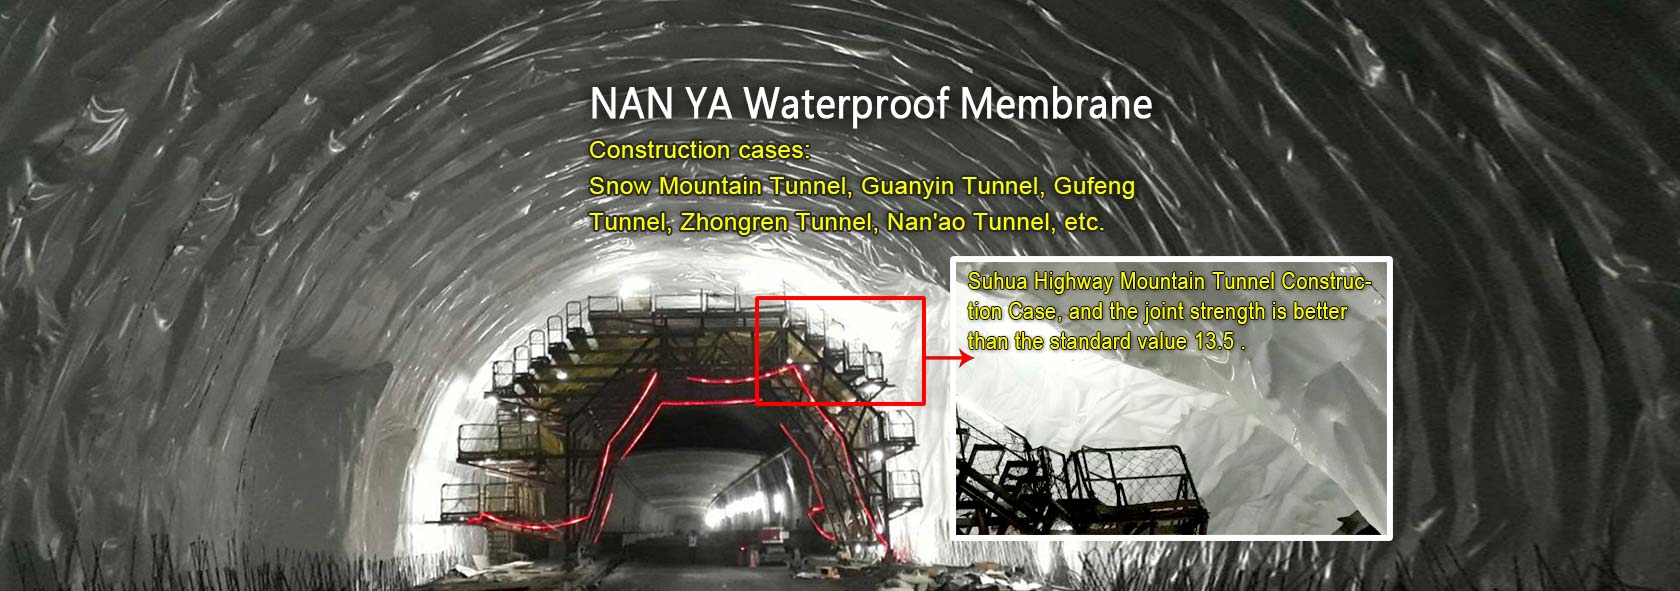 NanYa Waterproof Membrane
Suhua Highway Improvement Construction